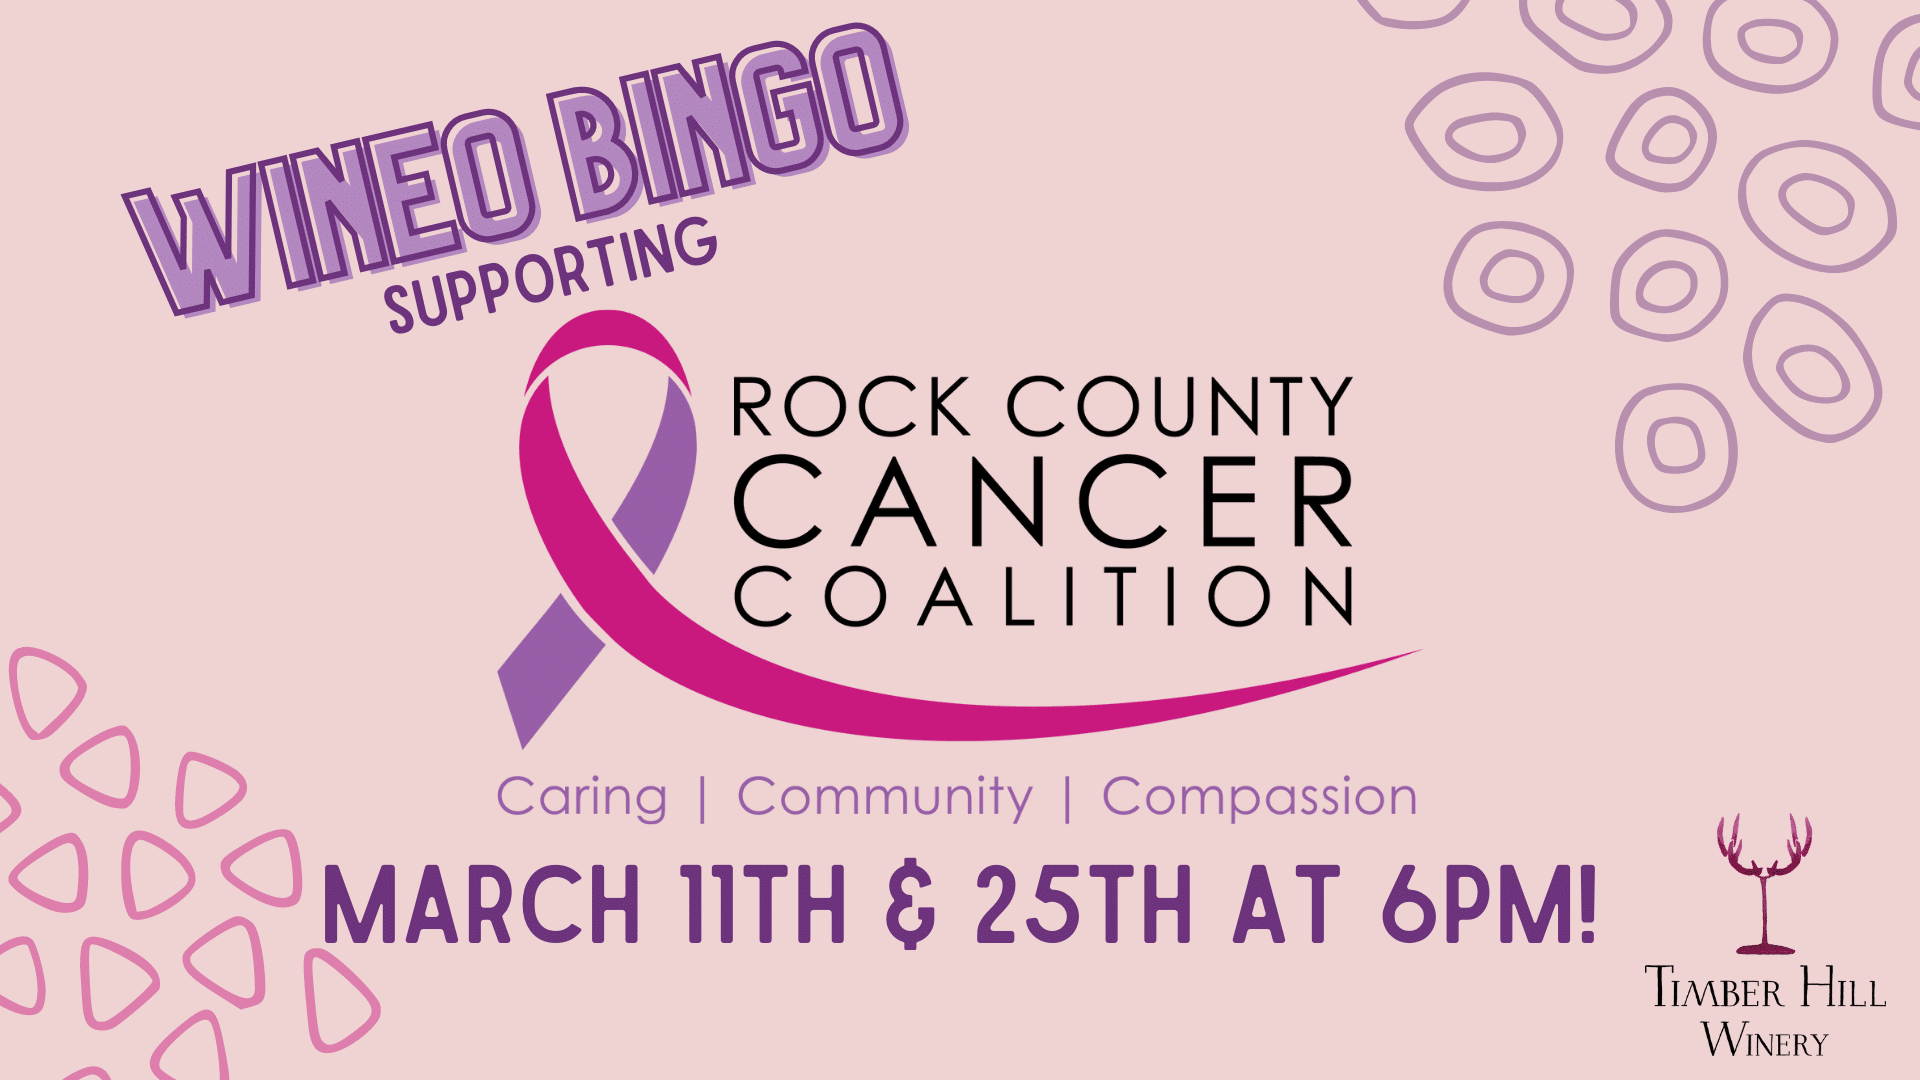 Wineo Bingo Rock County Cancer Coalition